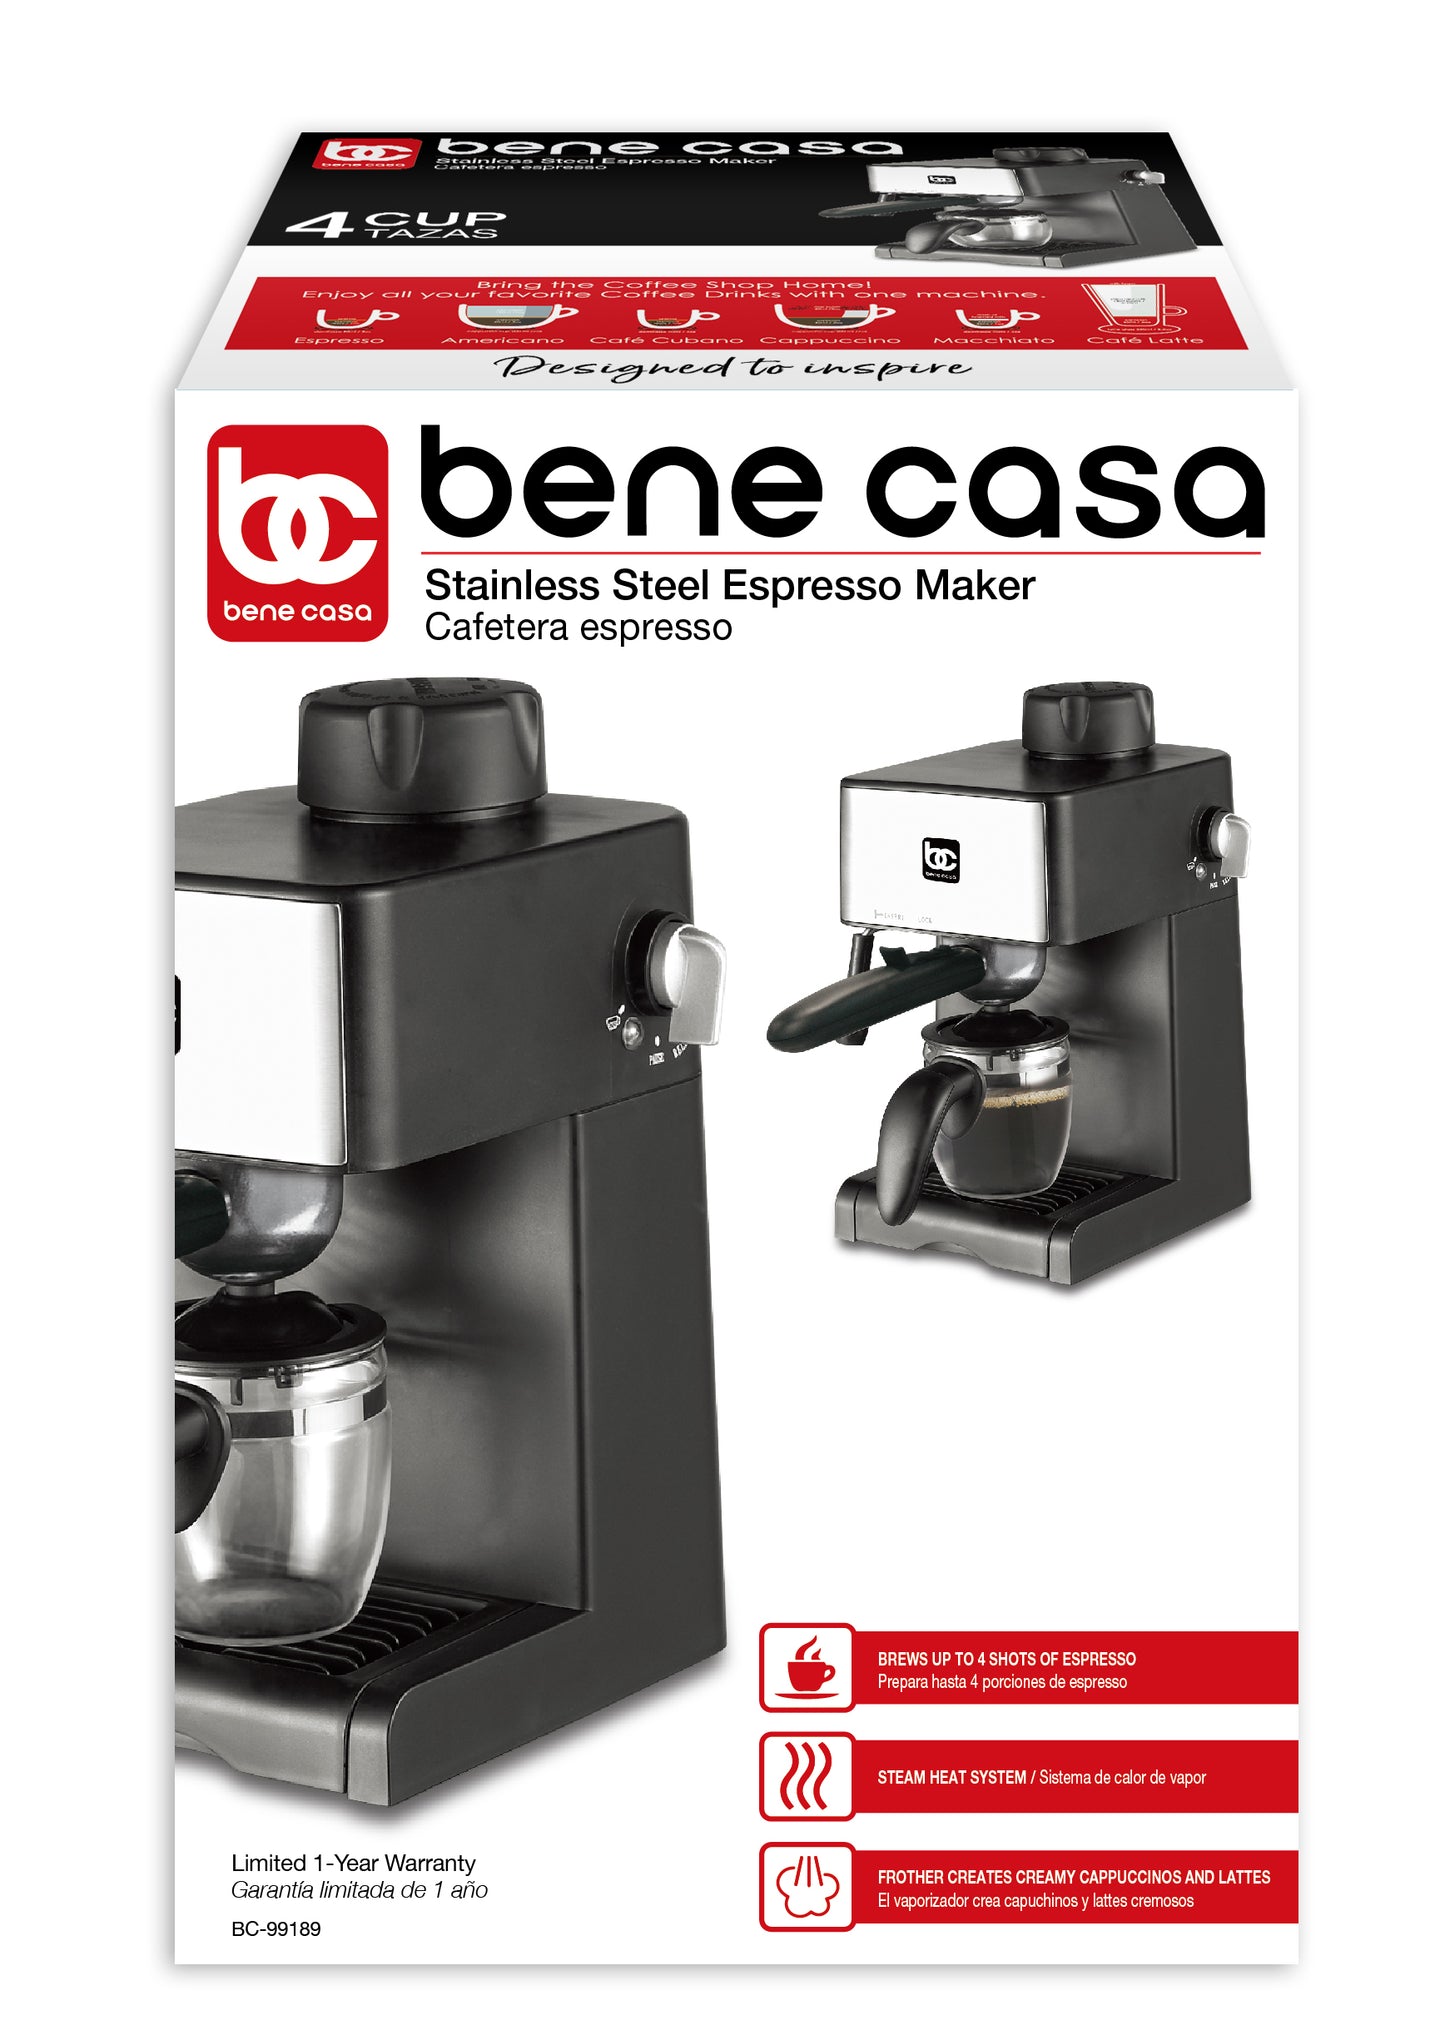 milk Casa Bene coffee, frother, 4-cup latt maker; cappuccino, espresso